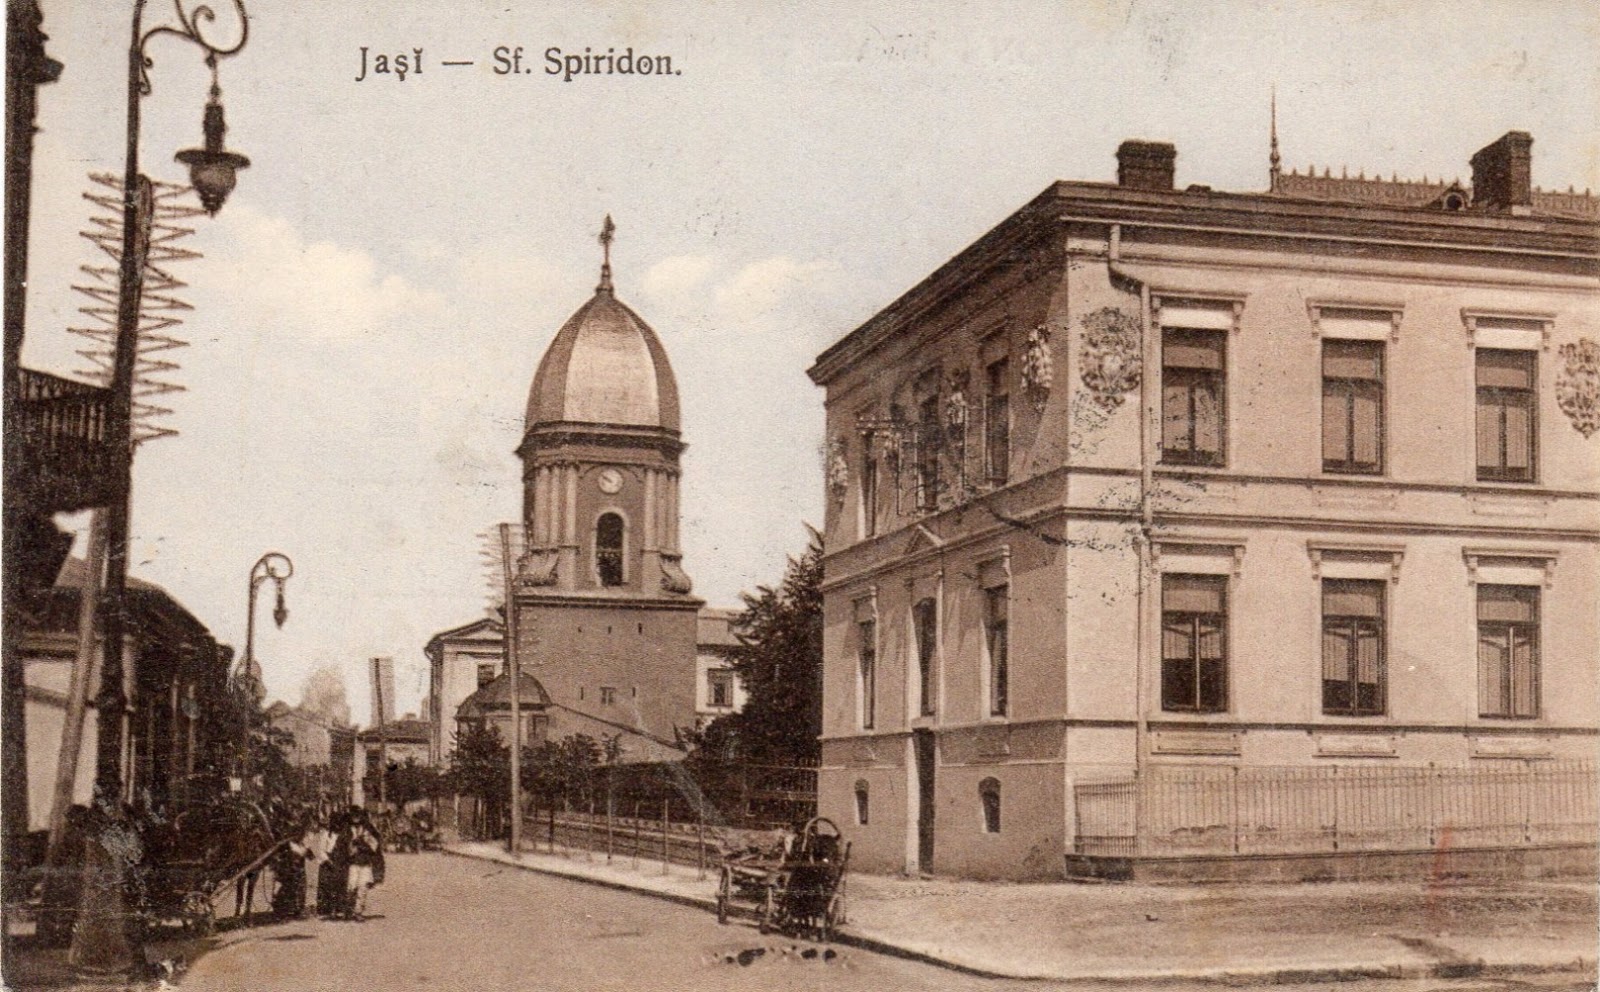 Turist în Orașul Iași (Iassy/Jassy): Spitalul Universitar Sfântul Spiridon